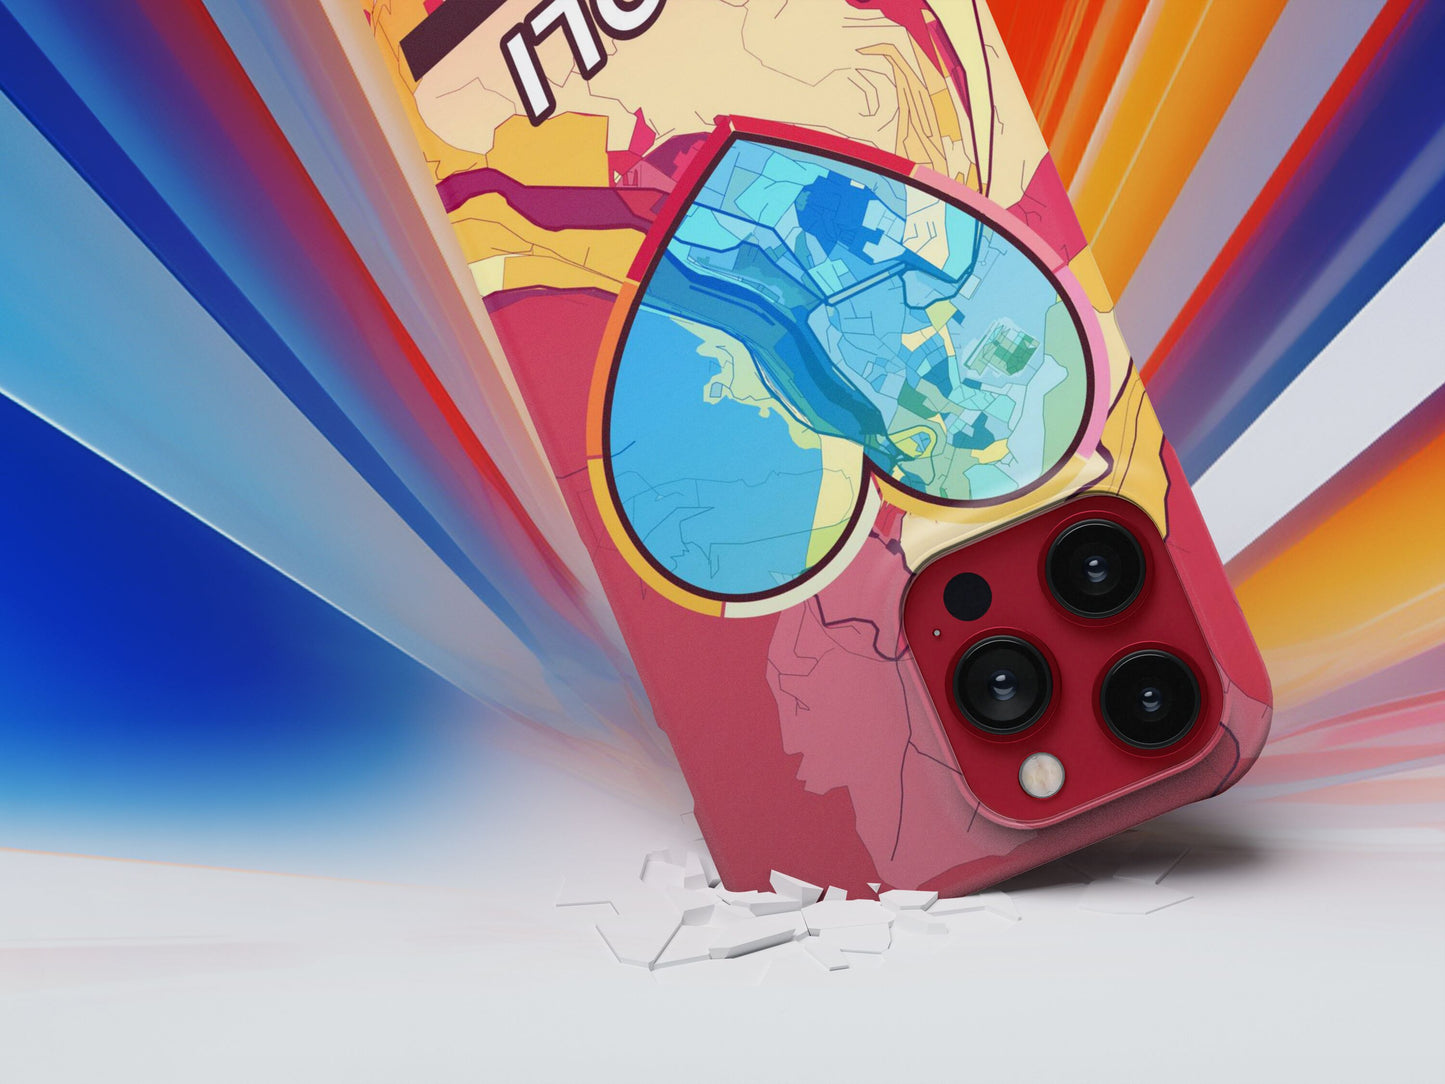 Tivoli Italy slim phone case with colorful icon